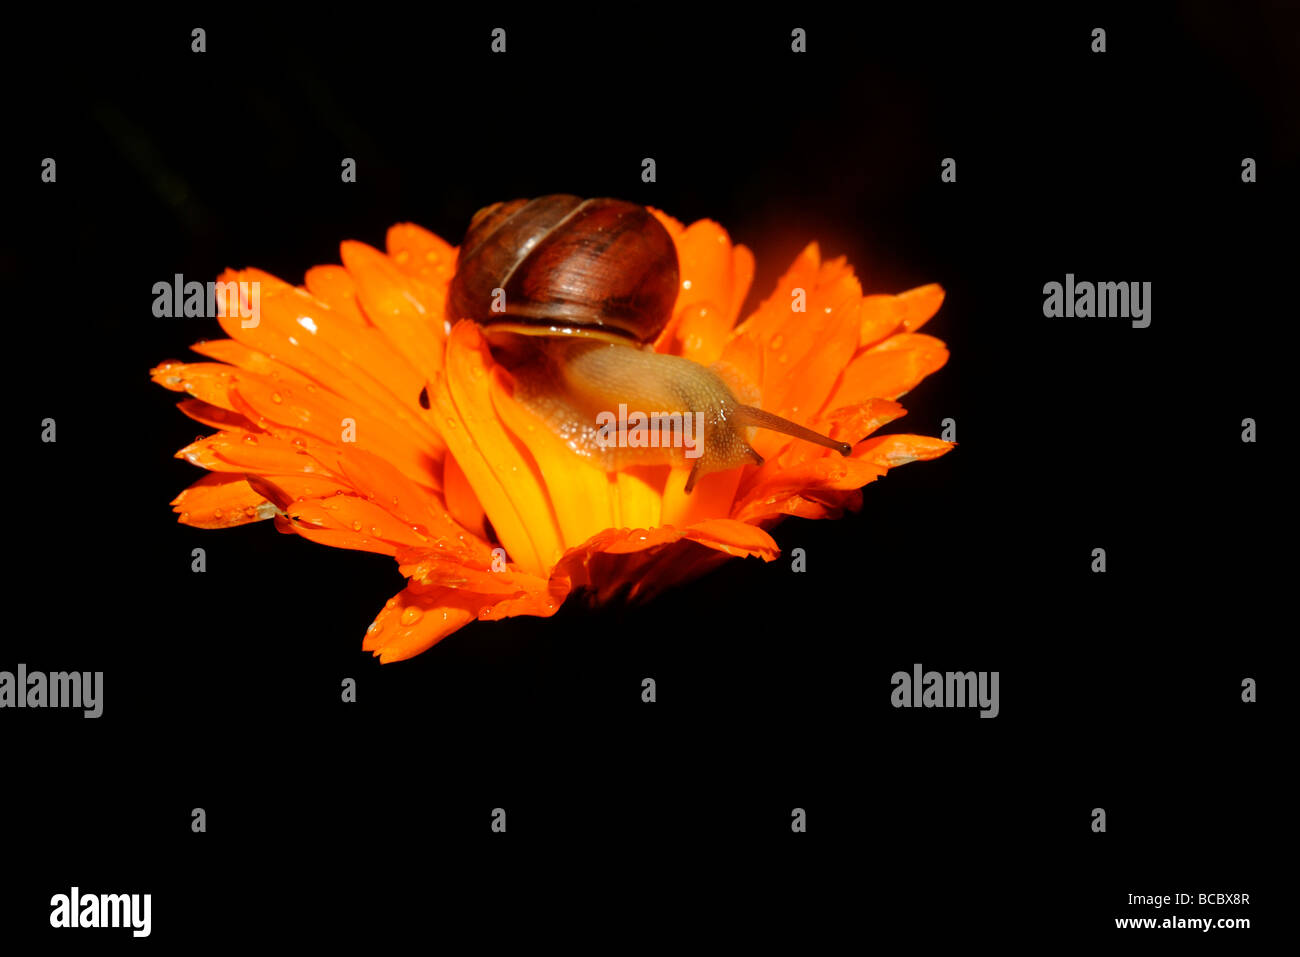 Snail on flower Stock Photo